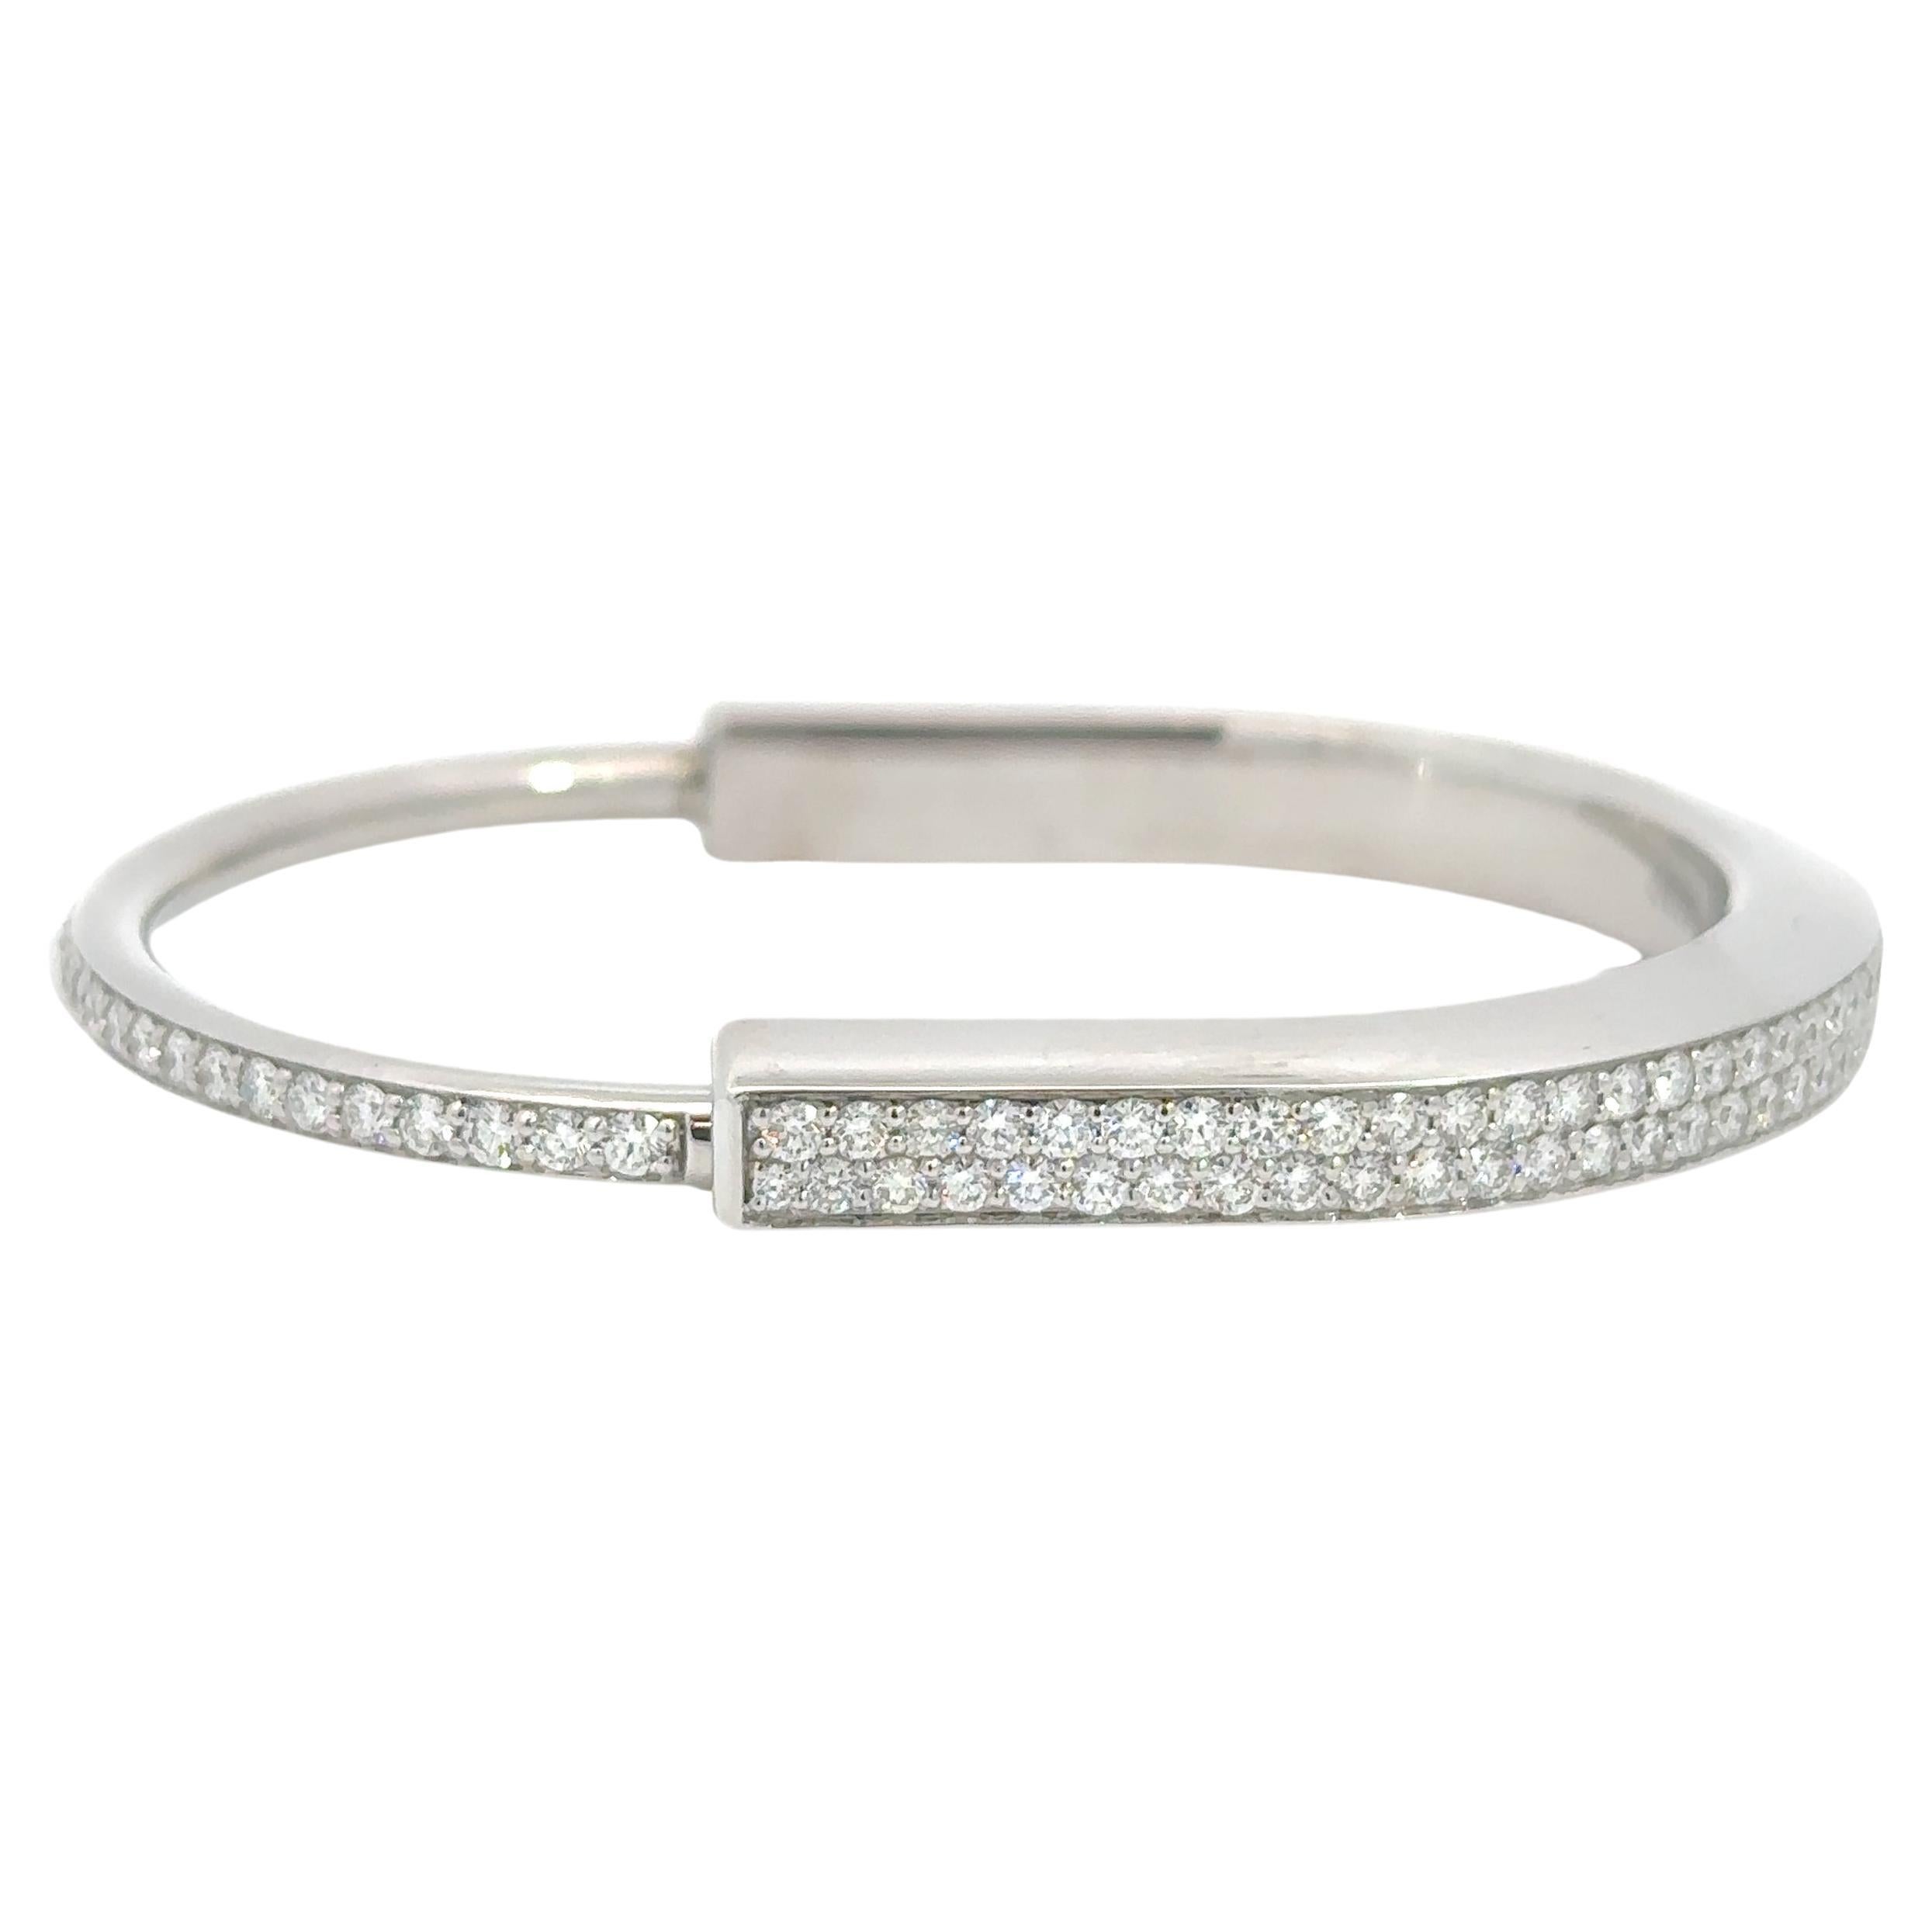 Tiffany & Co. Lock Bangle in White Gold and Full Pavé Diamonds